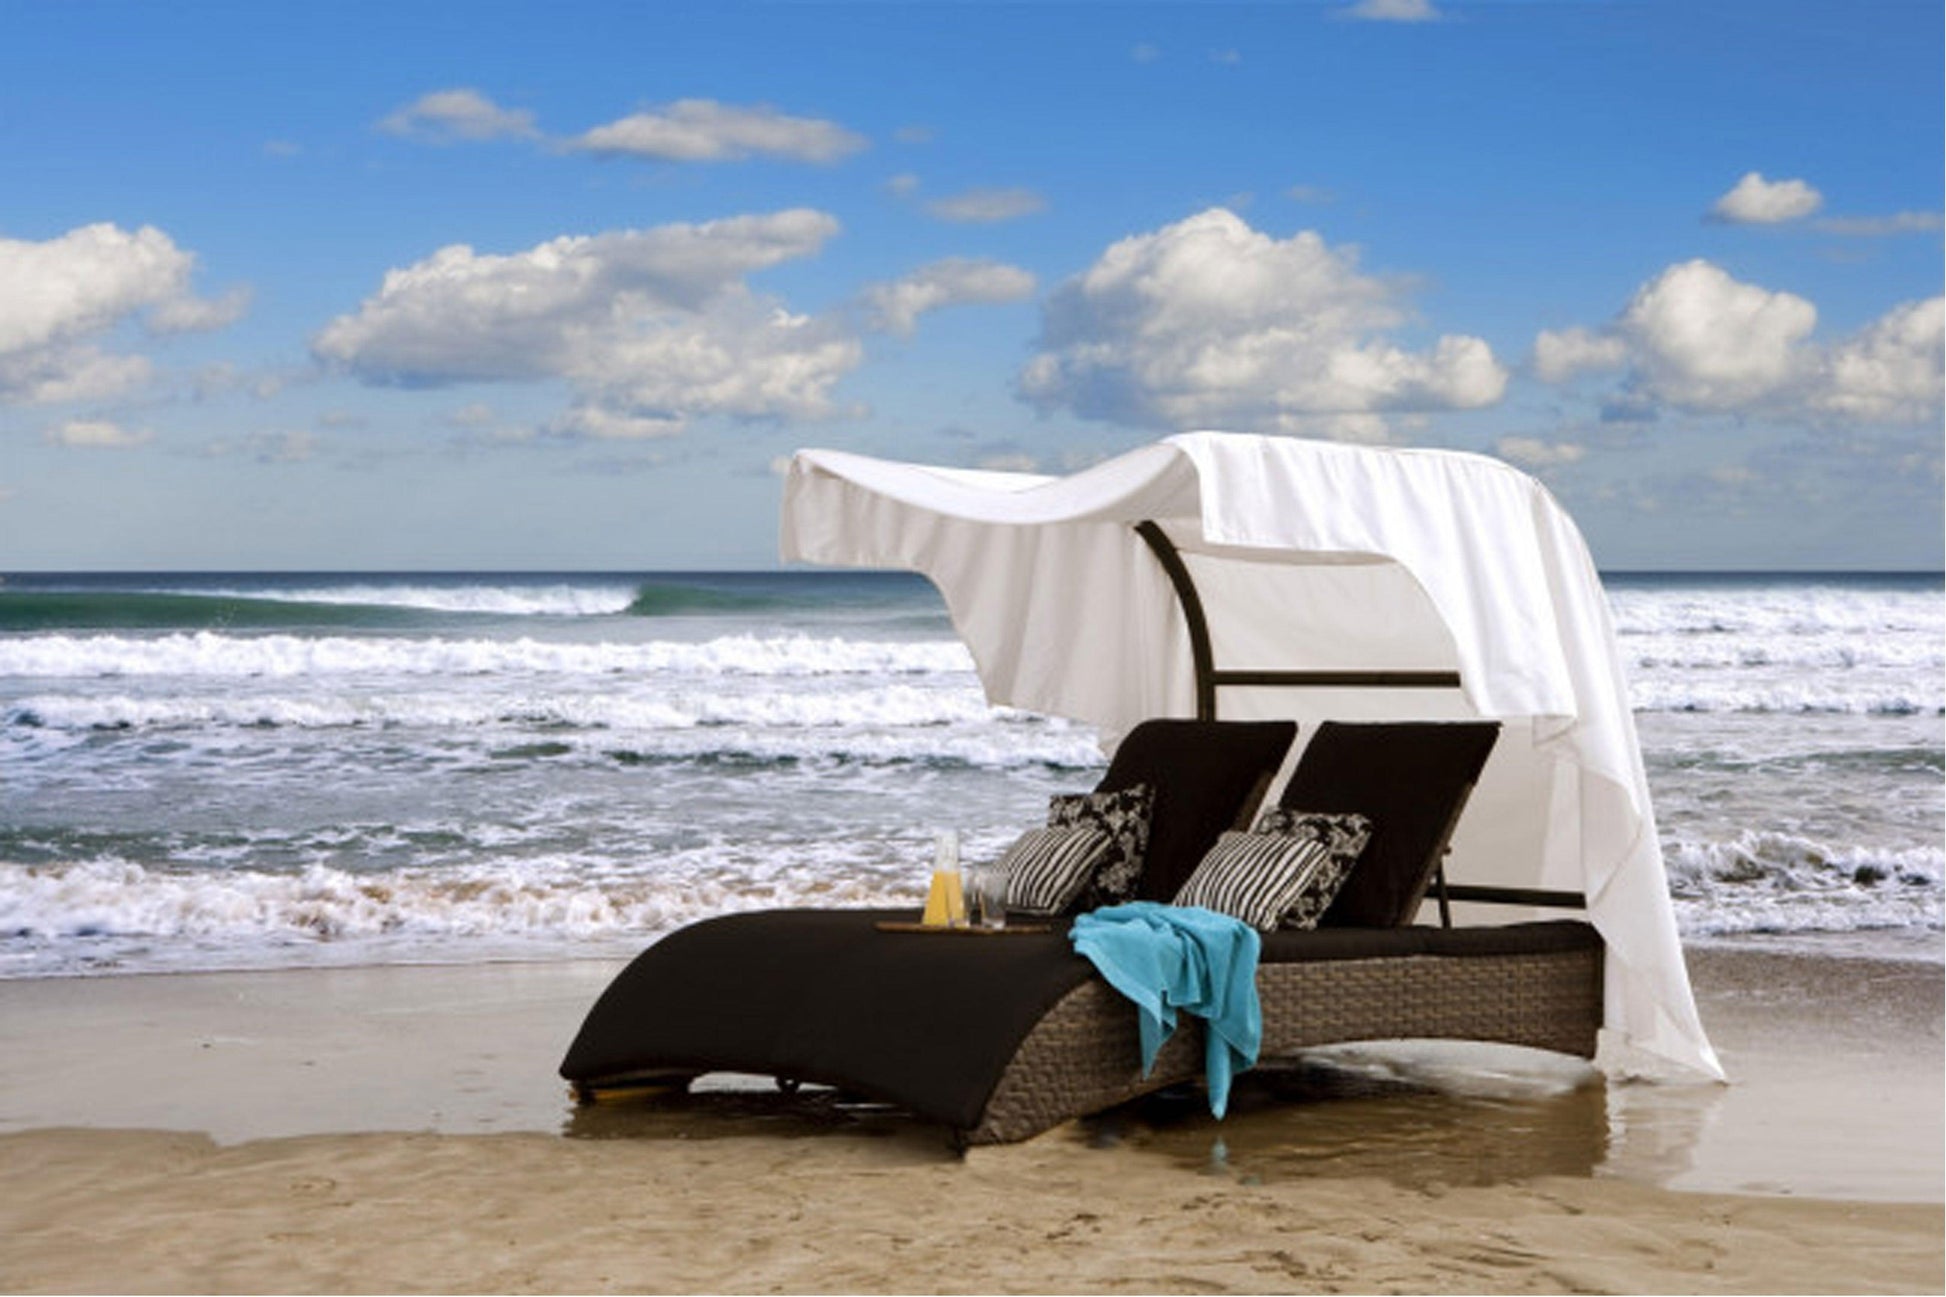 Big Sur 3 PC Daybed Set w/off-white cushions - Venini Furniture 